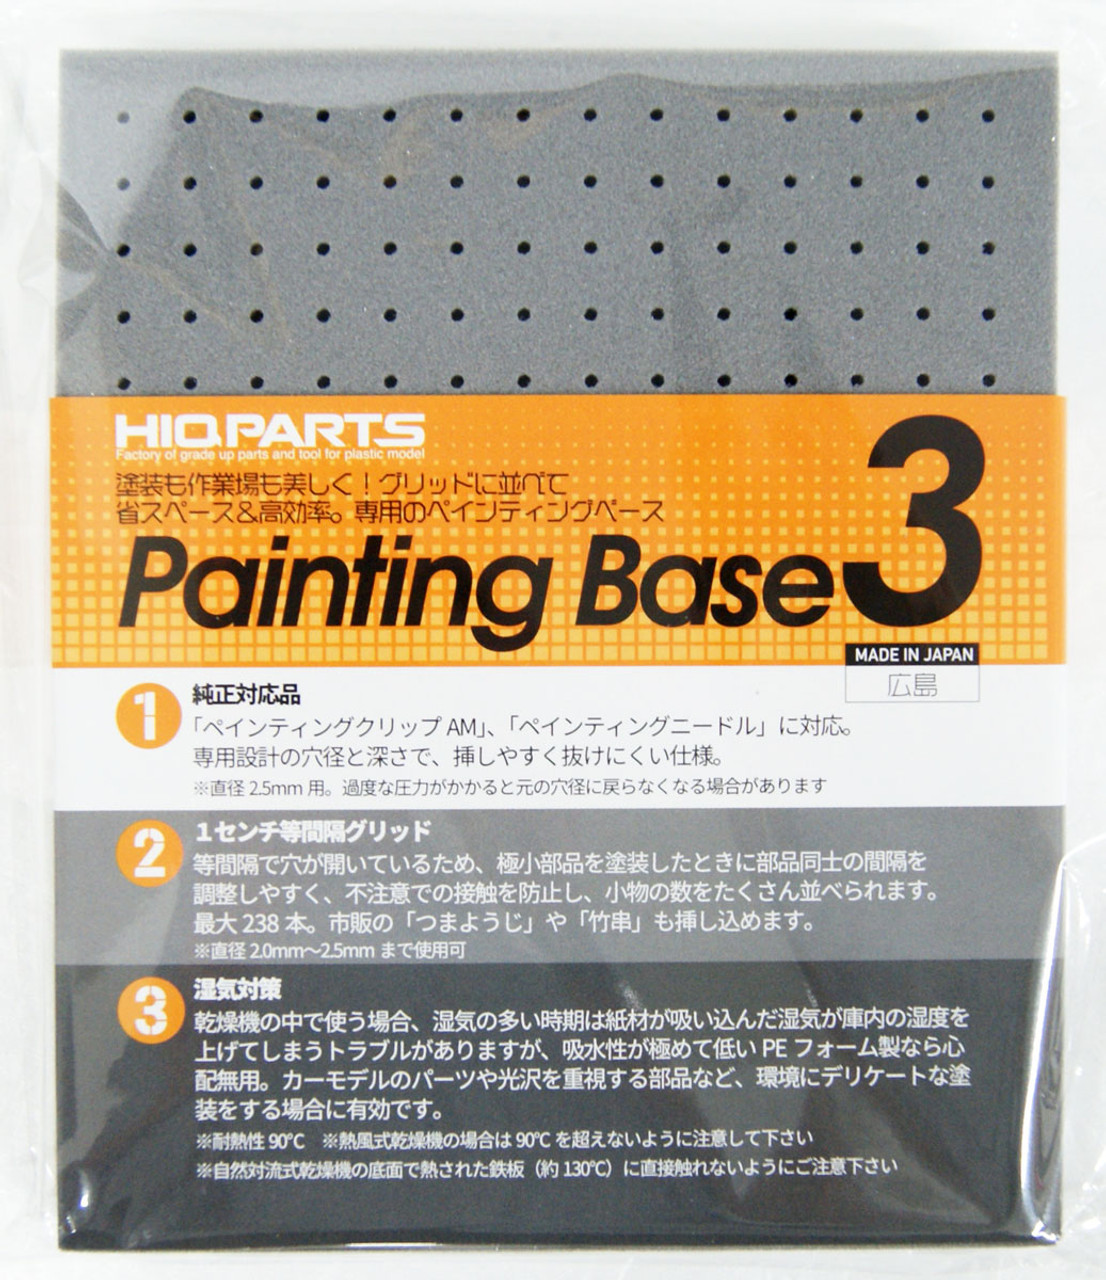 HiQparts PTB3 Painting Base 3 (1pc)